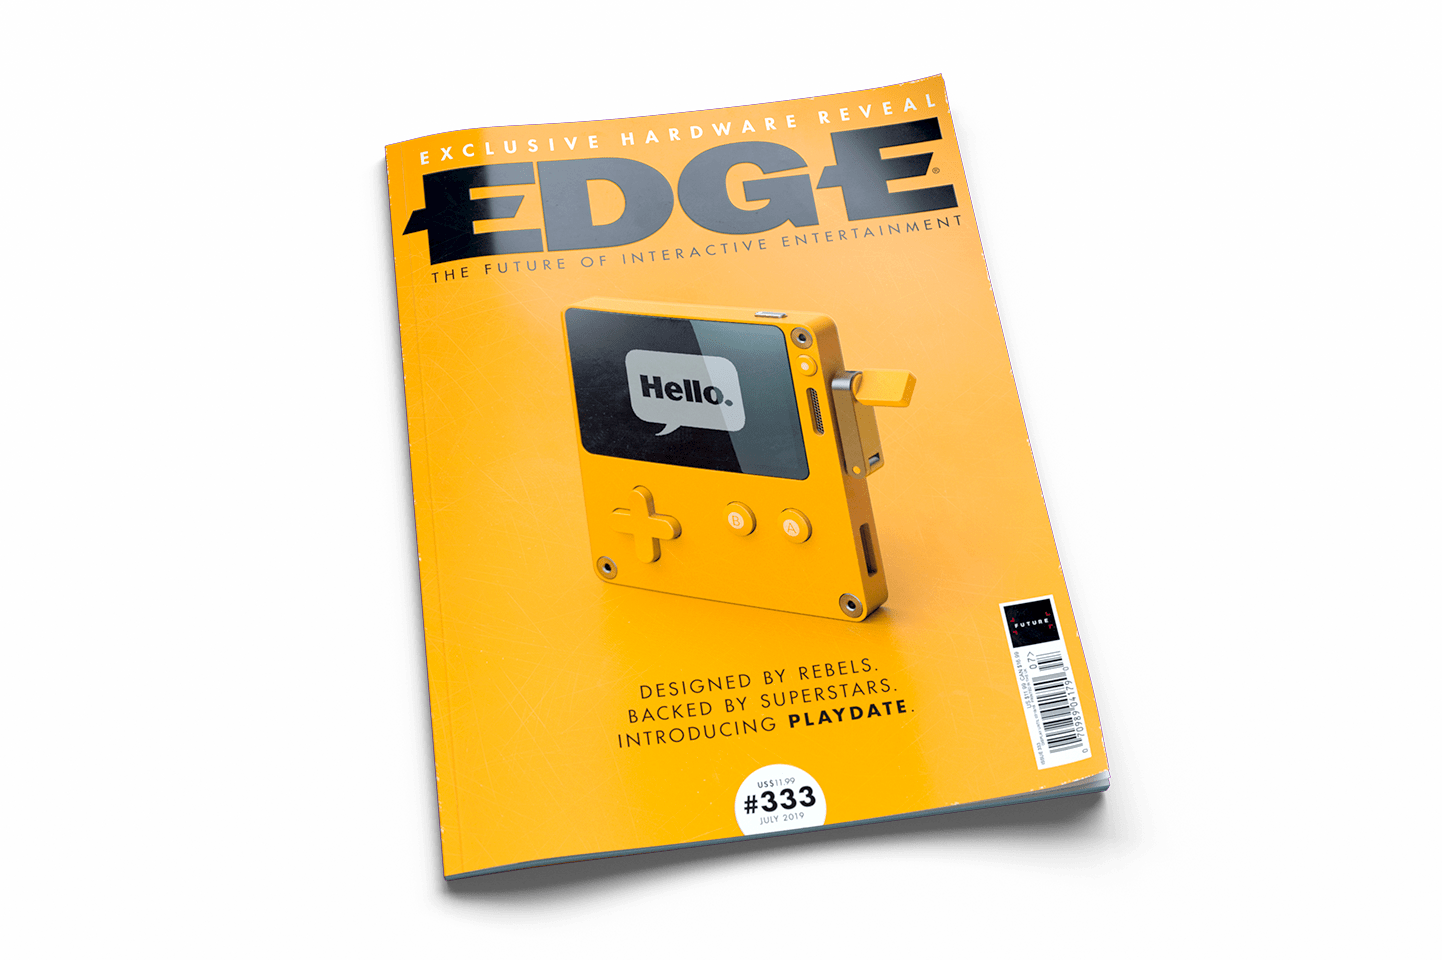 Issue #333 of Edge Magazine